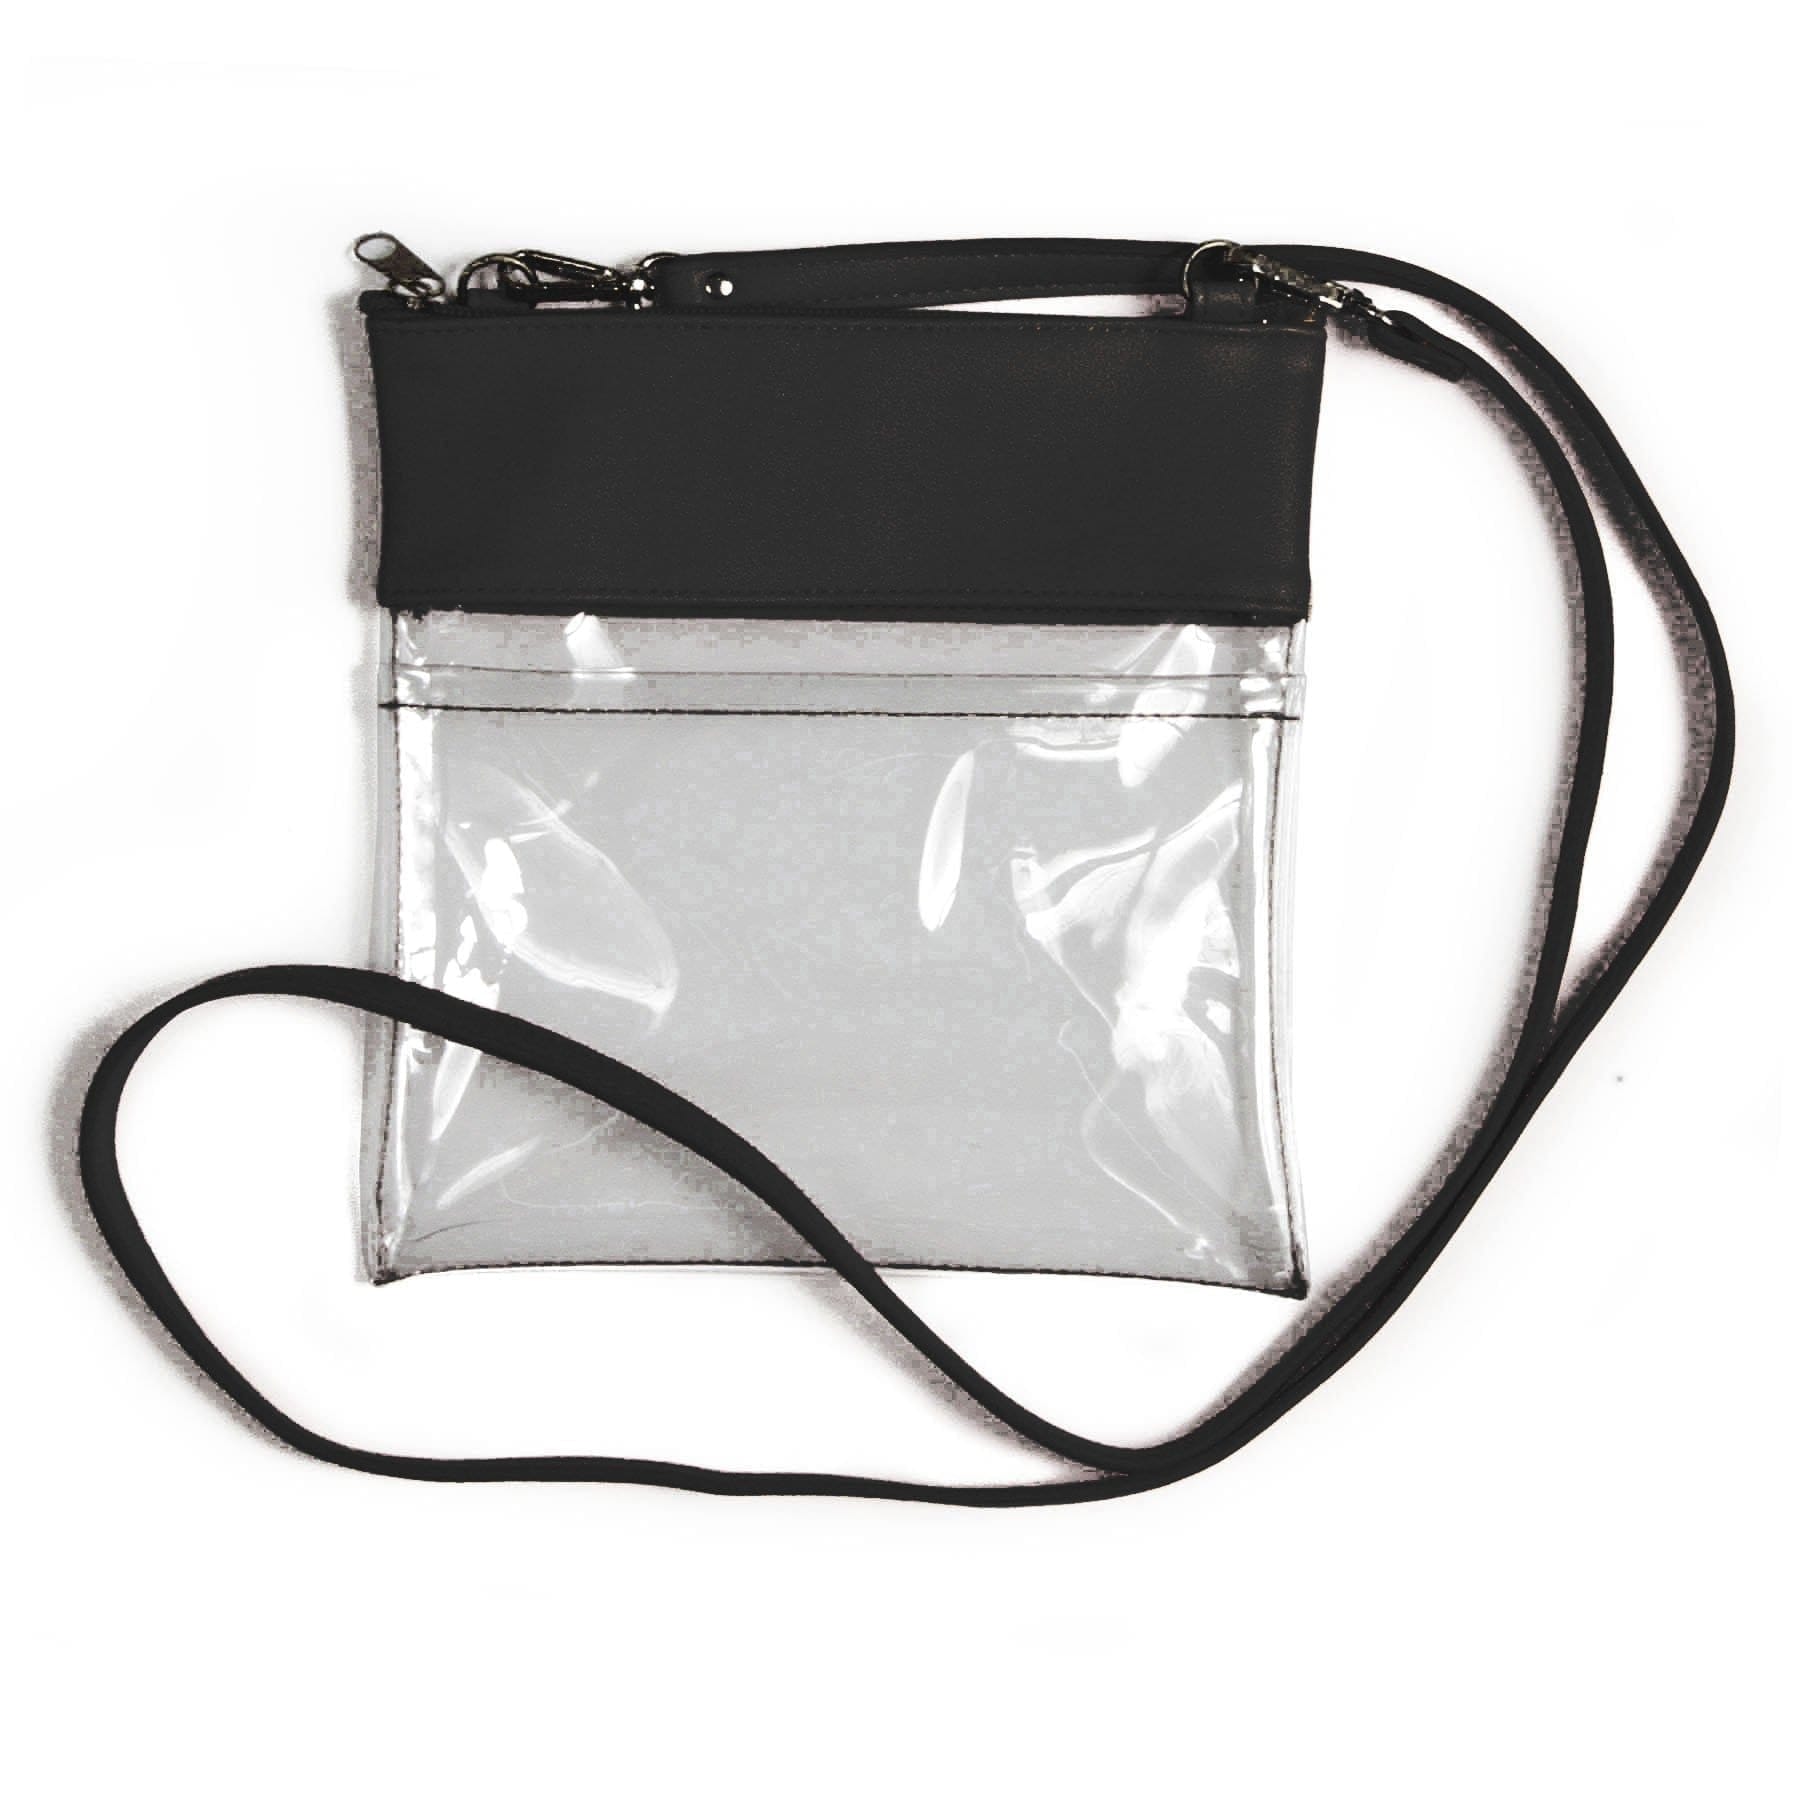 Customize any handbag with our detachable, add-on adjustable vegan